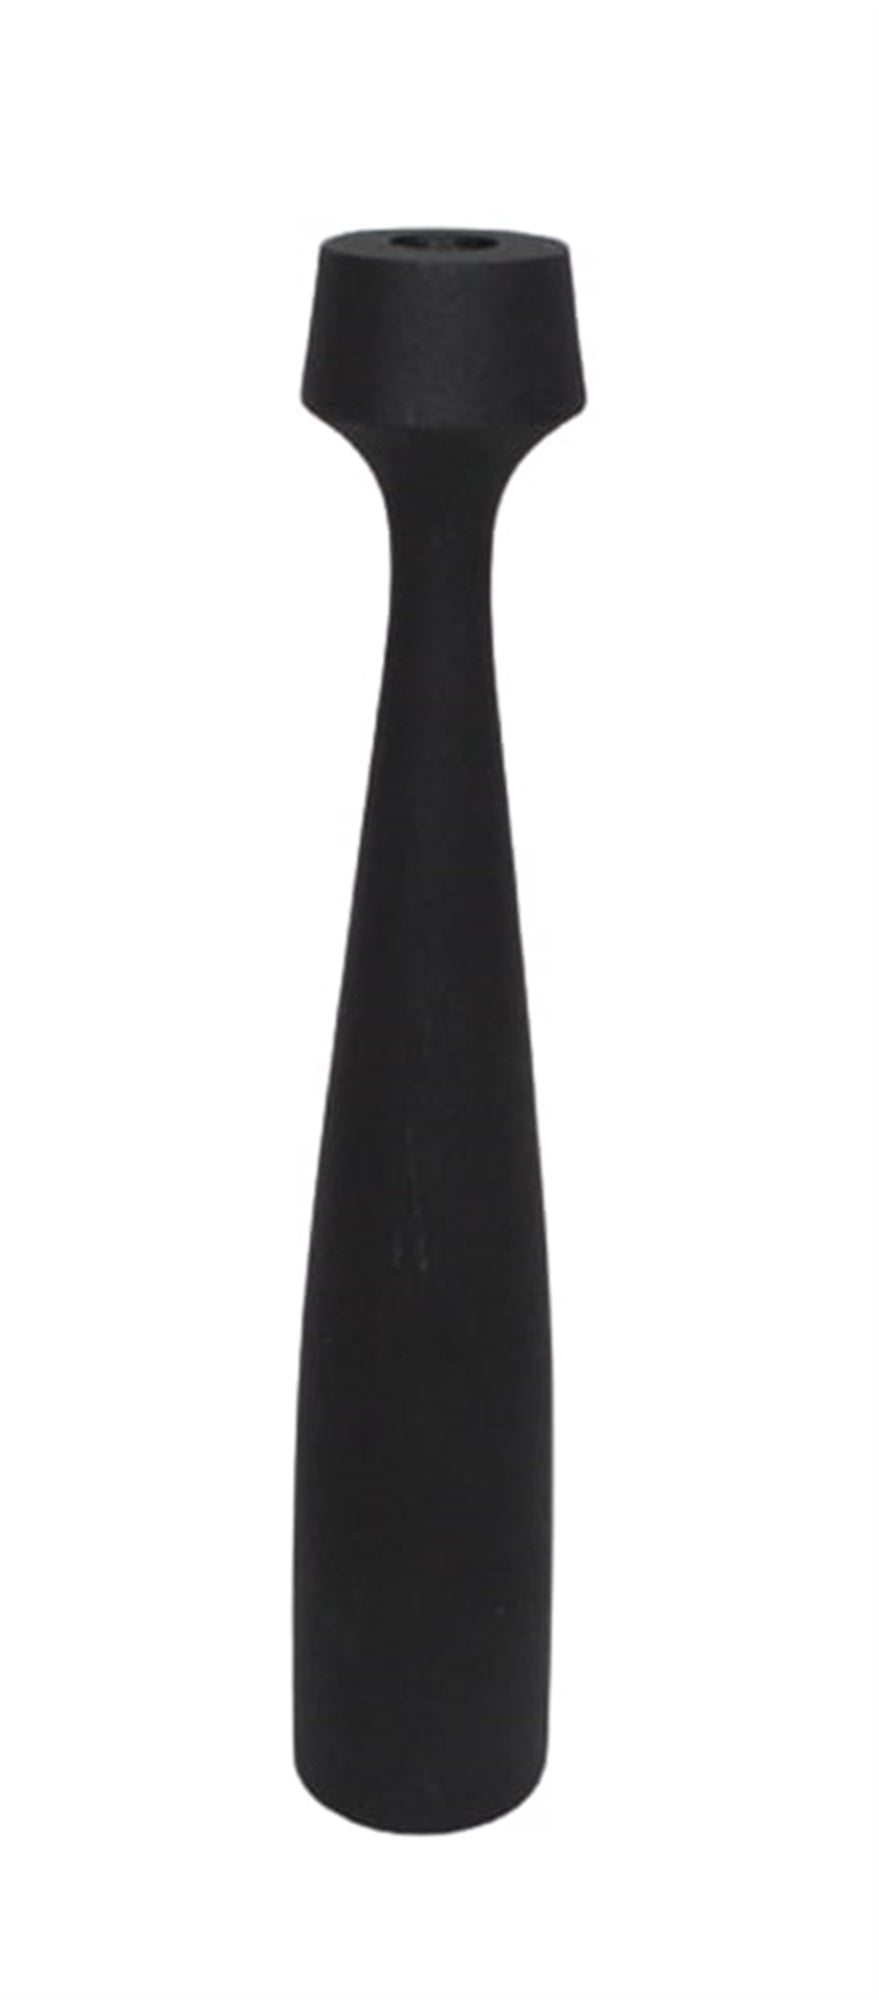 Black Aluminum Candle Holder, 14.25